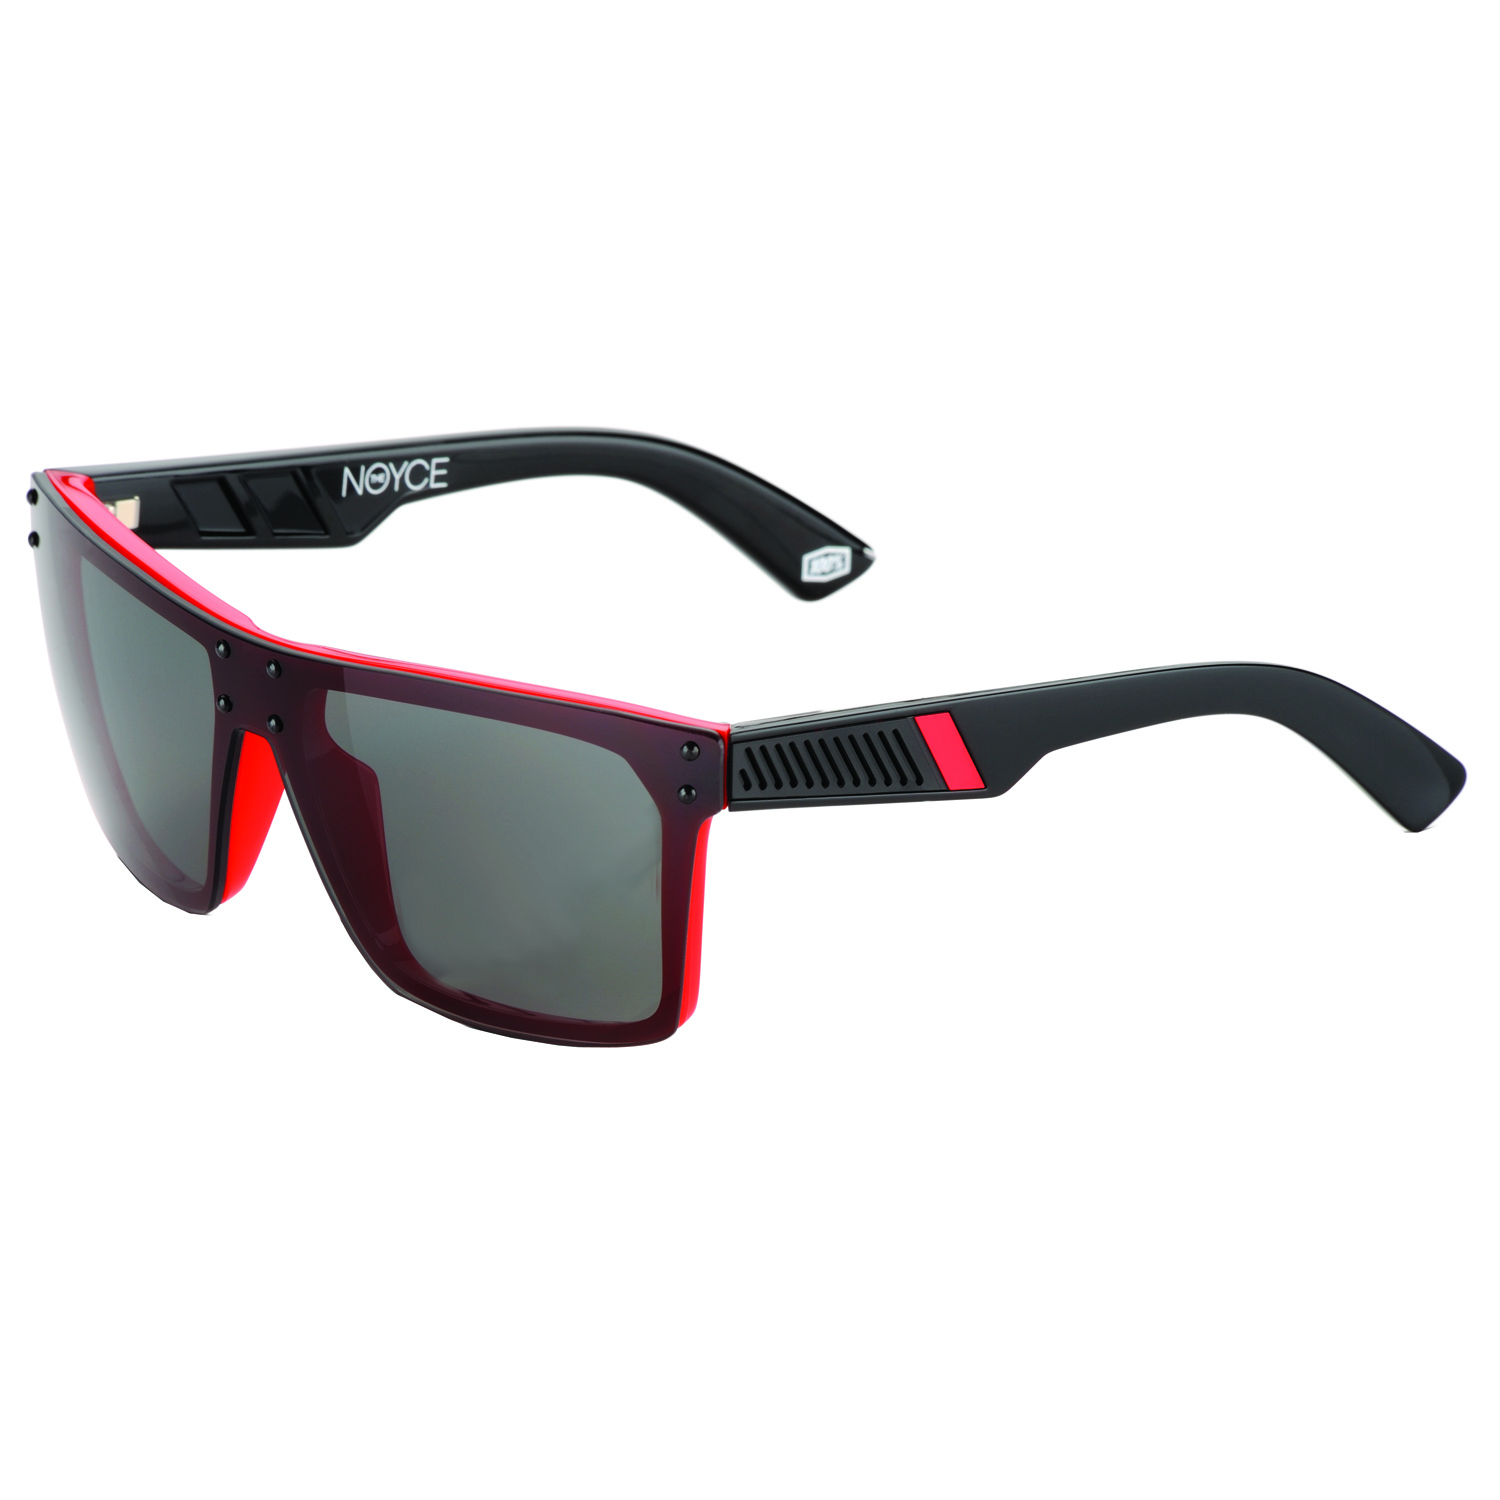 100% Sunglasses The Noyce Gloss Black/Red - Smoke Tint